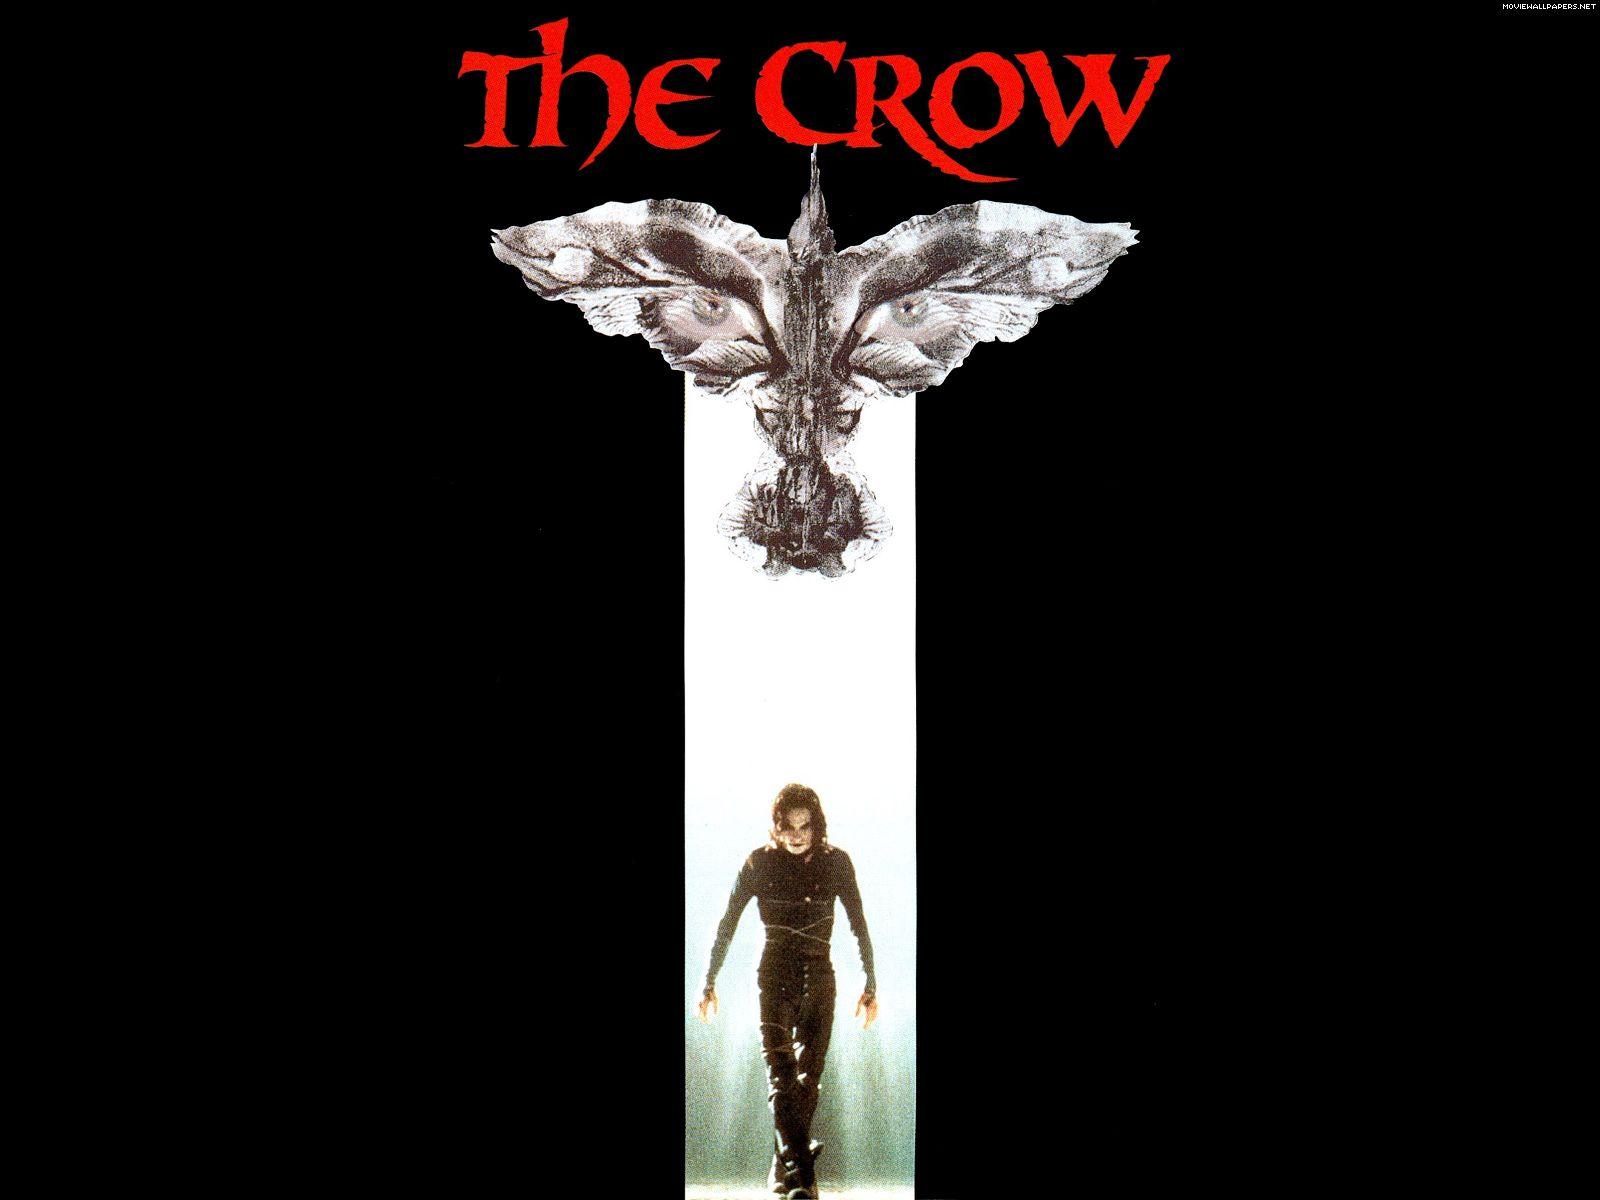 The Crow Movie Logo - The Crow Remake | Sean's Humble Opinion